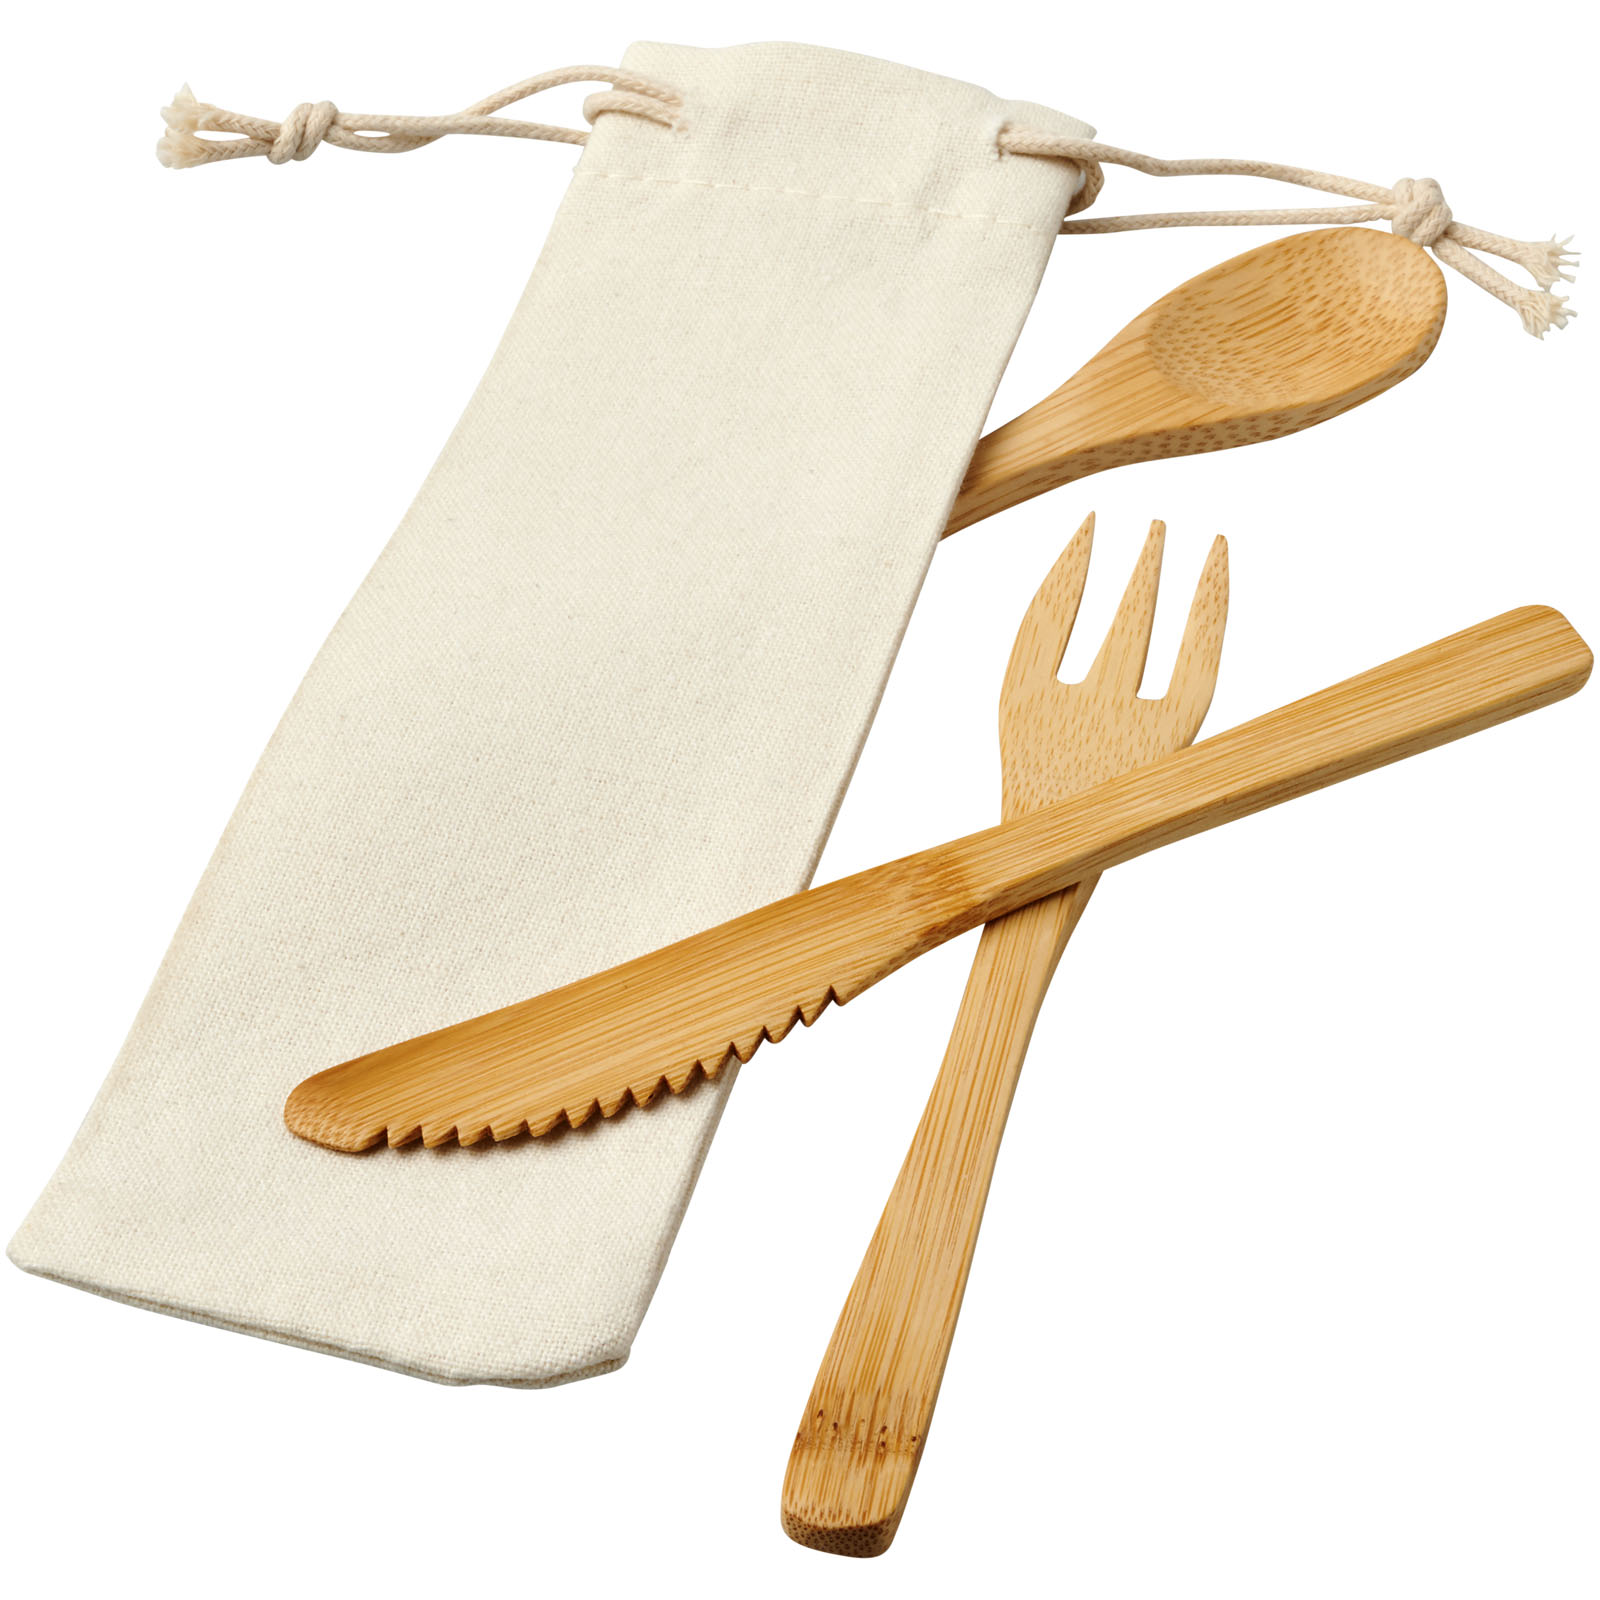 Home & Kitchen - Celuk bamboo cutlery set